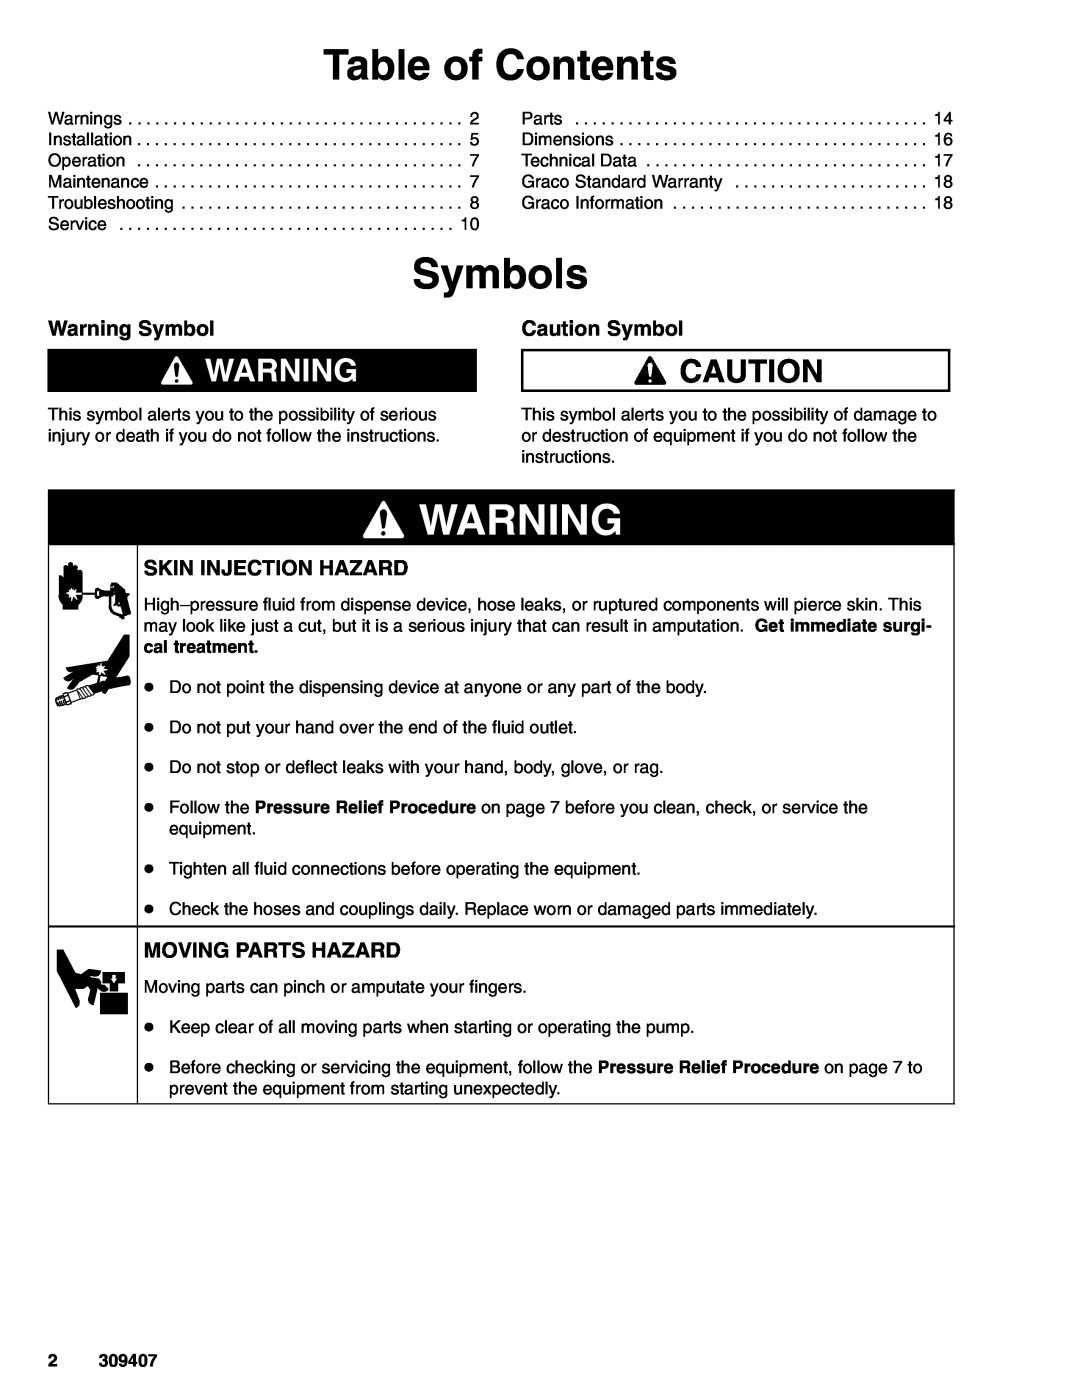 Graco 965124 Table of Contents, Symbols, Warning Symbol, Caution Symbol, Skin Injection Hazard, Moving Parts Hazard 